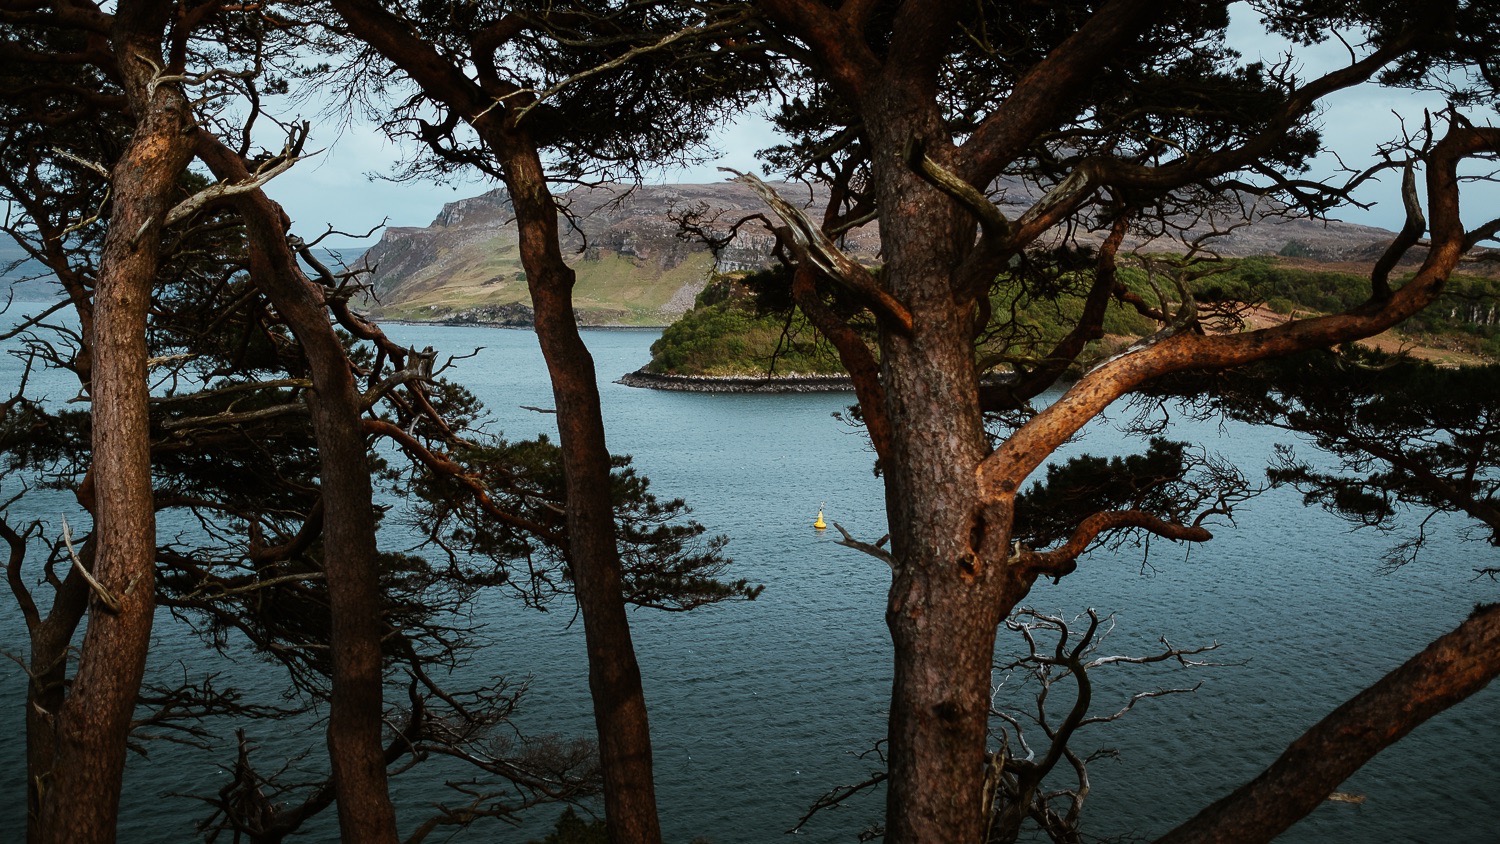 0044-scotland-tamron-le monde de la photo-paysage-20190509184252-compress.jpg